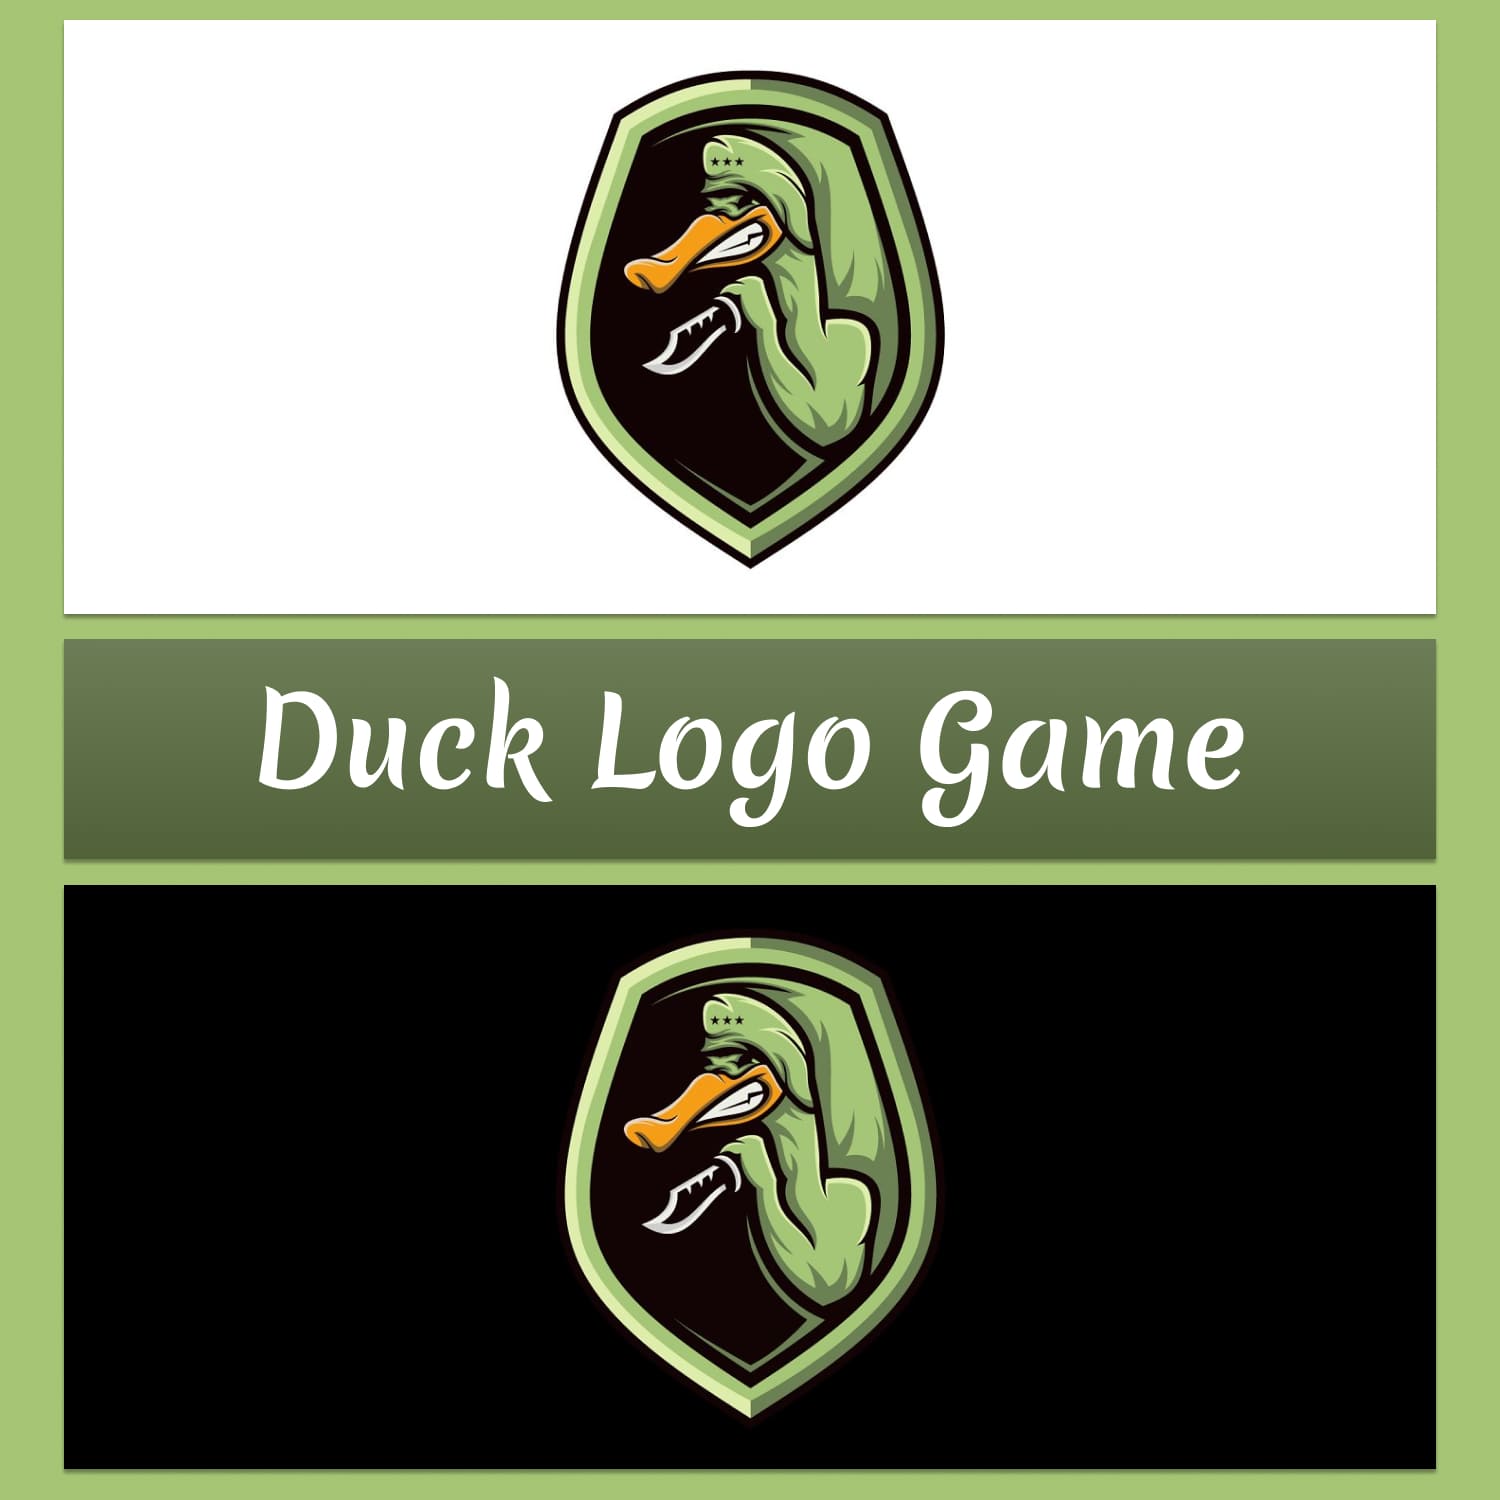 Duck logo game.